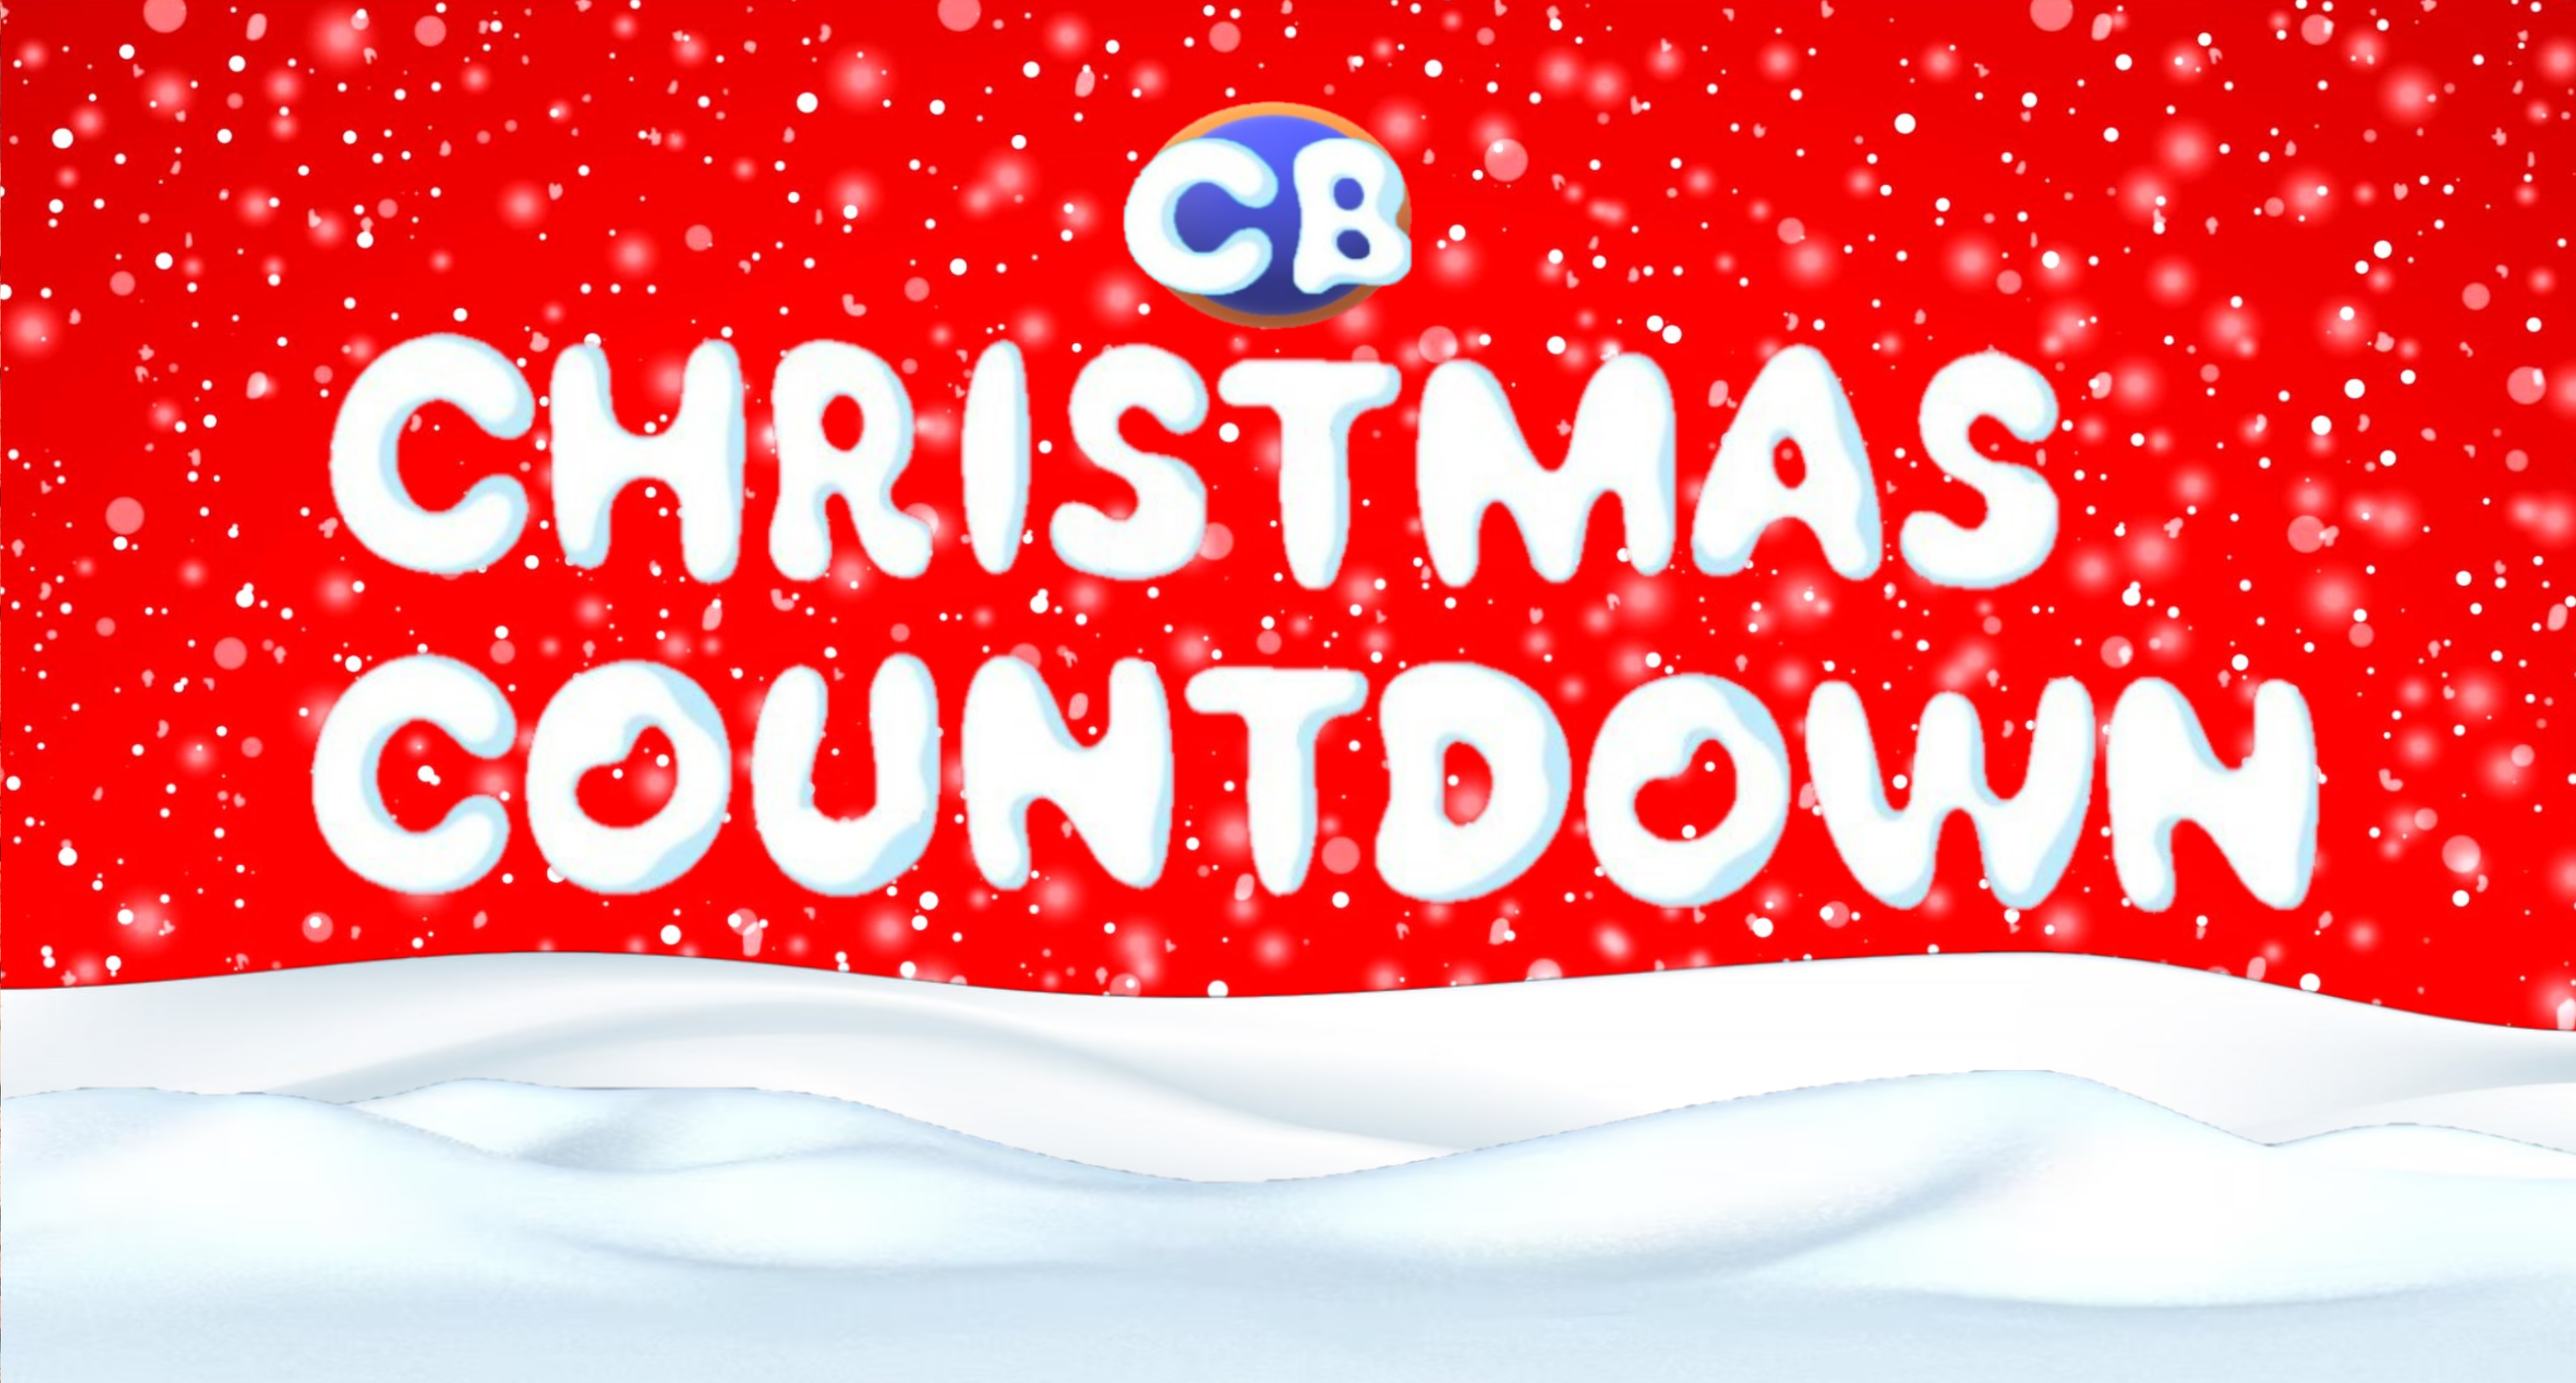 CB Christmas Countdown